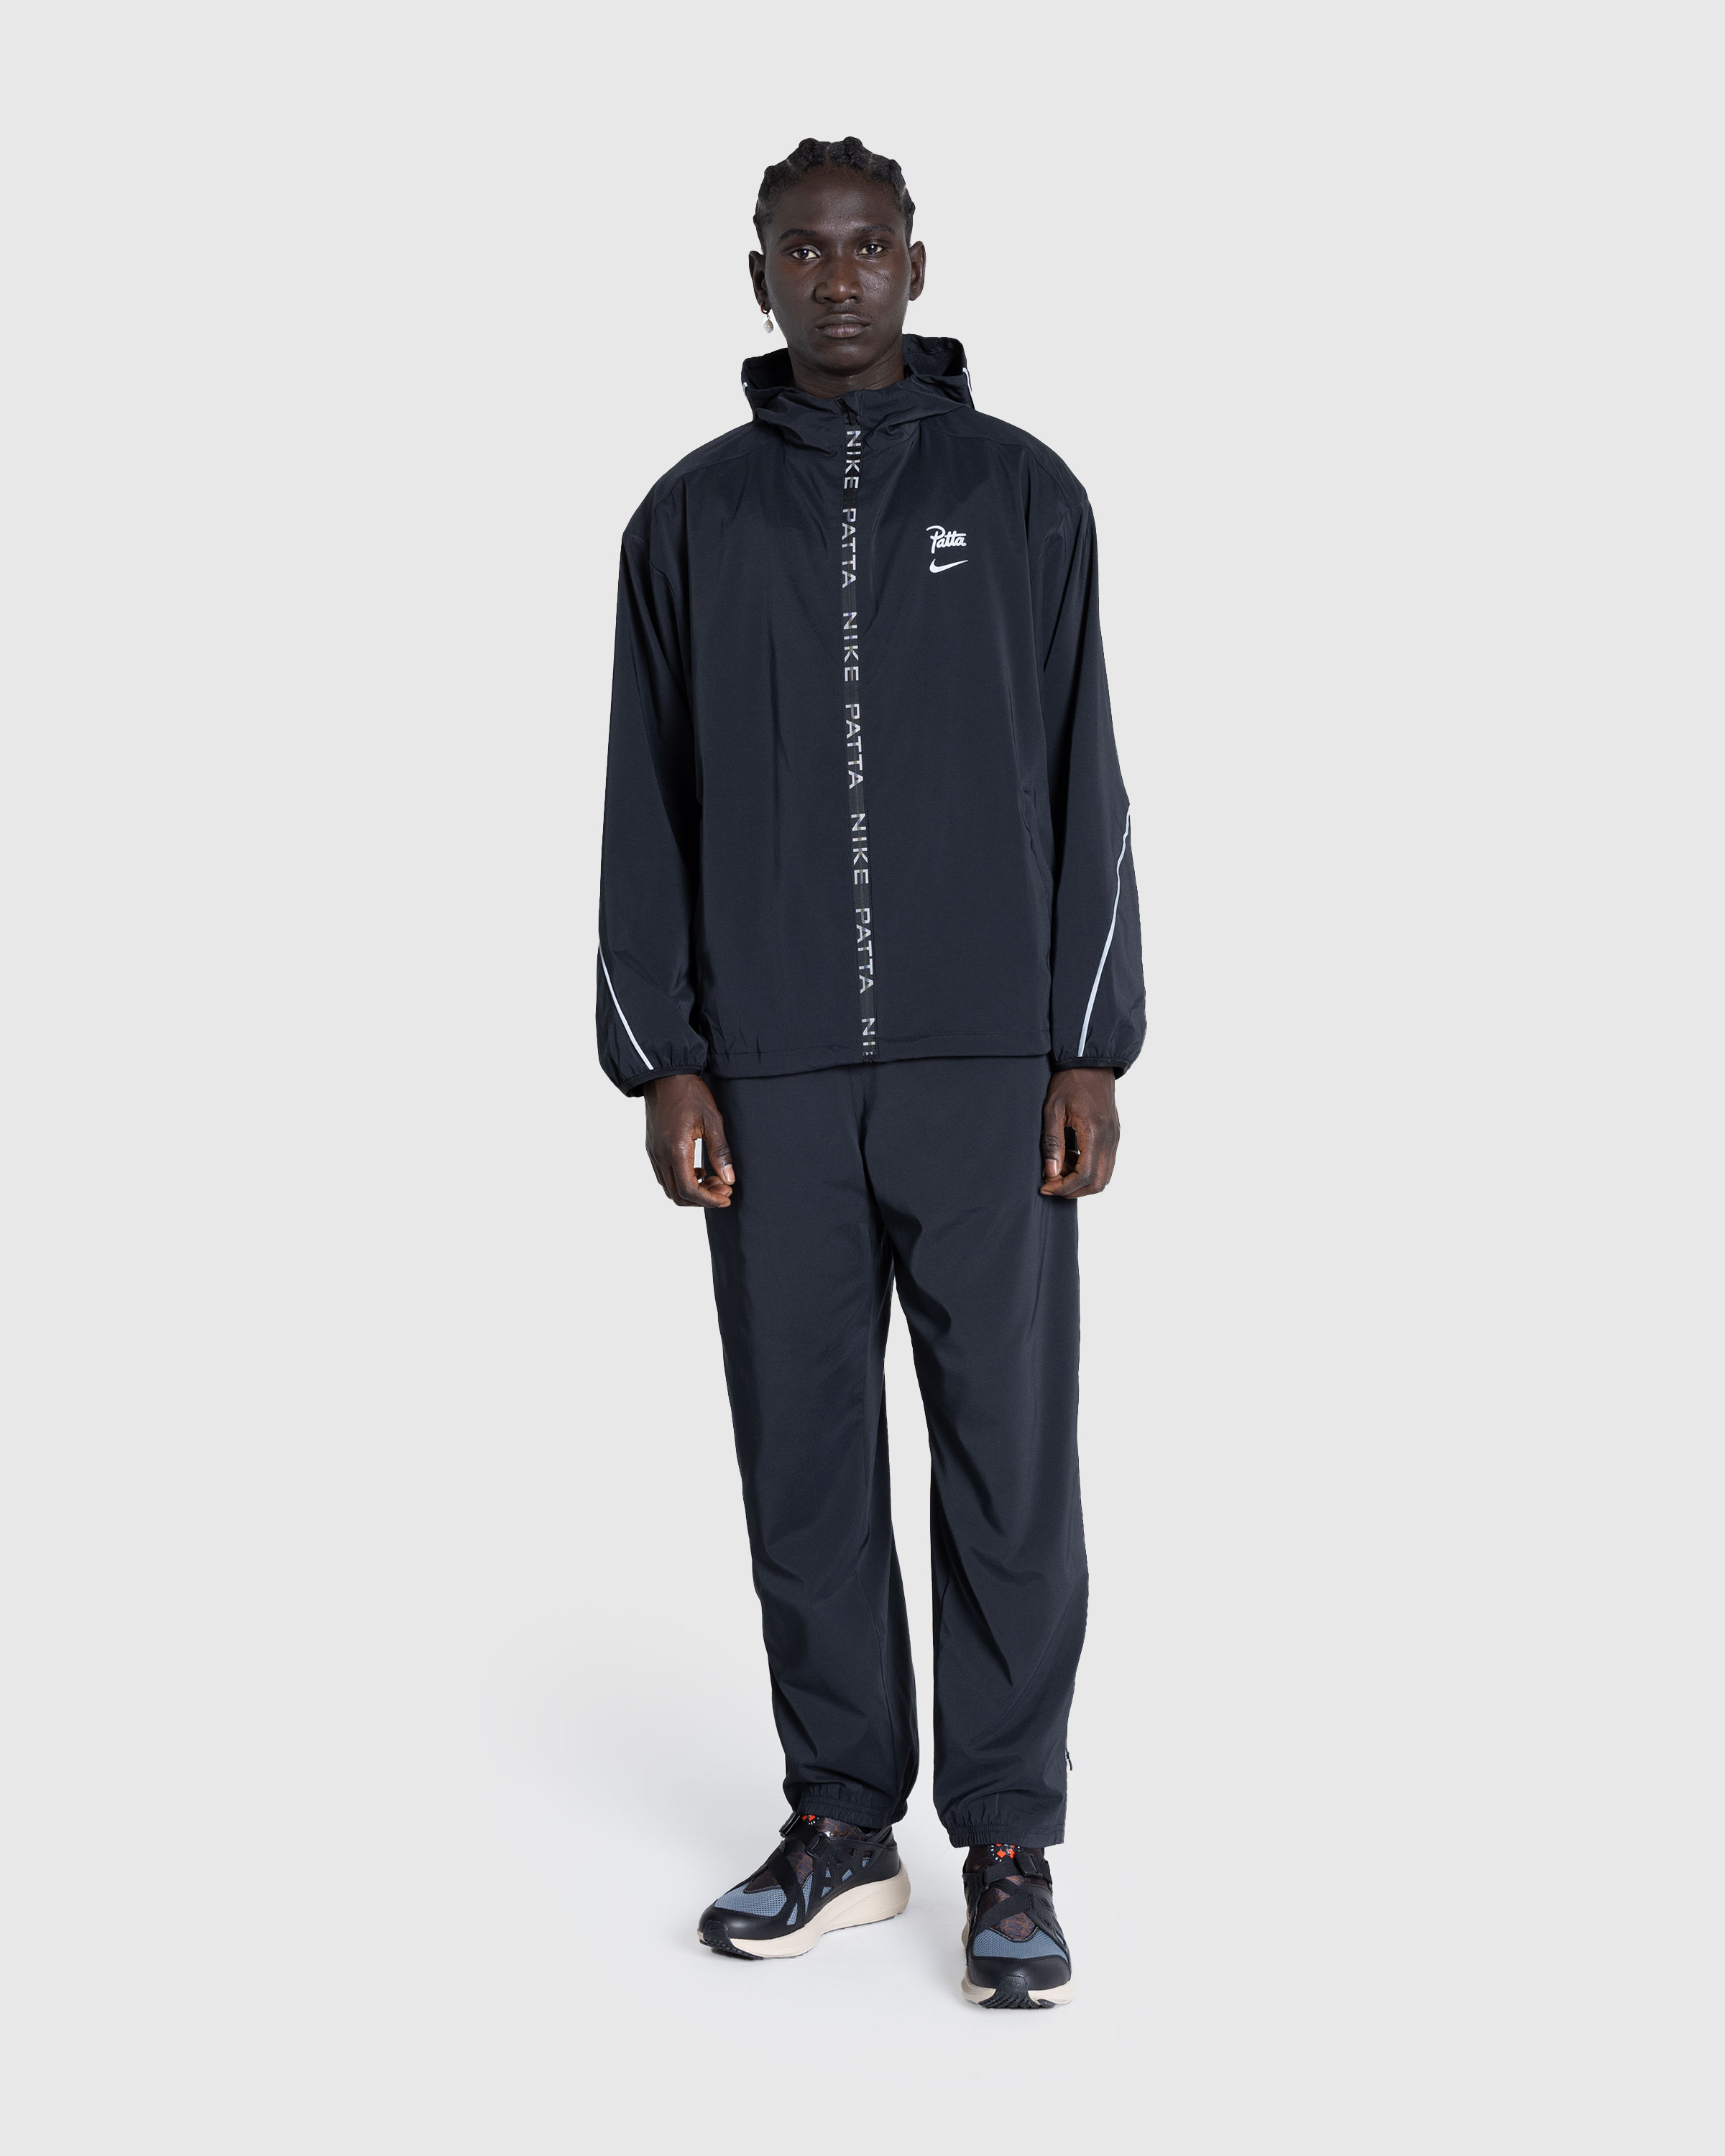 Nike x Patta – Men's Full-Zip Jacket Black - Jackets - Black - Image 3